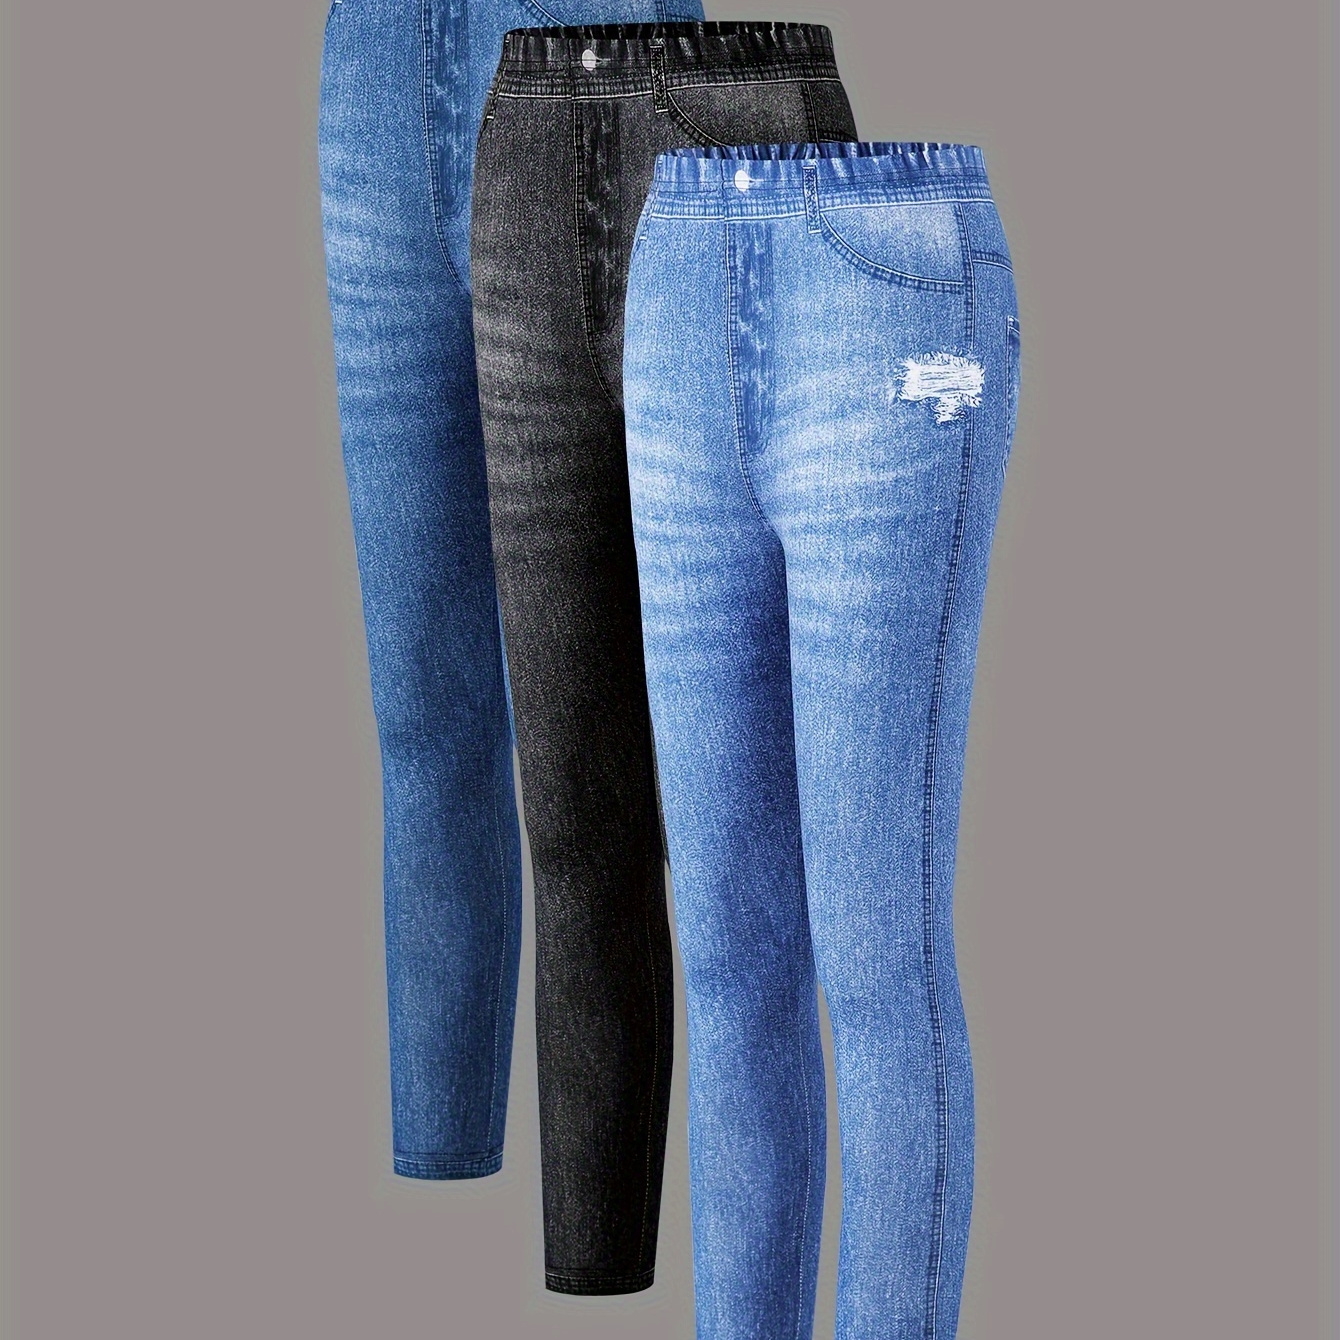 

Girls 3pcs/set Fit & Stretchy Allover Imitation Denim Pattern Print Leggings For Spring & Fall